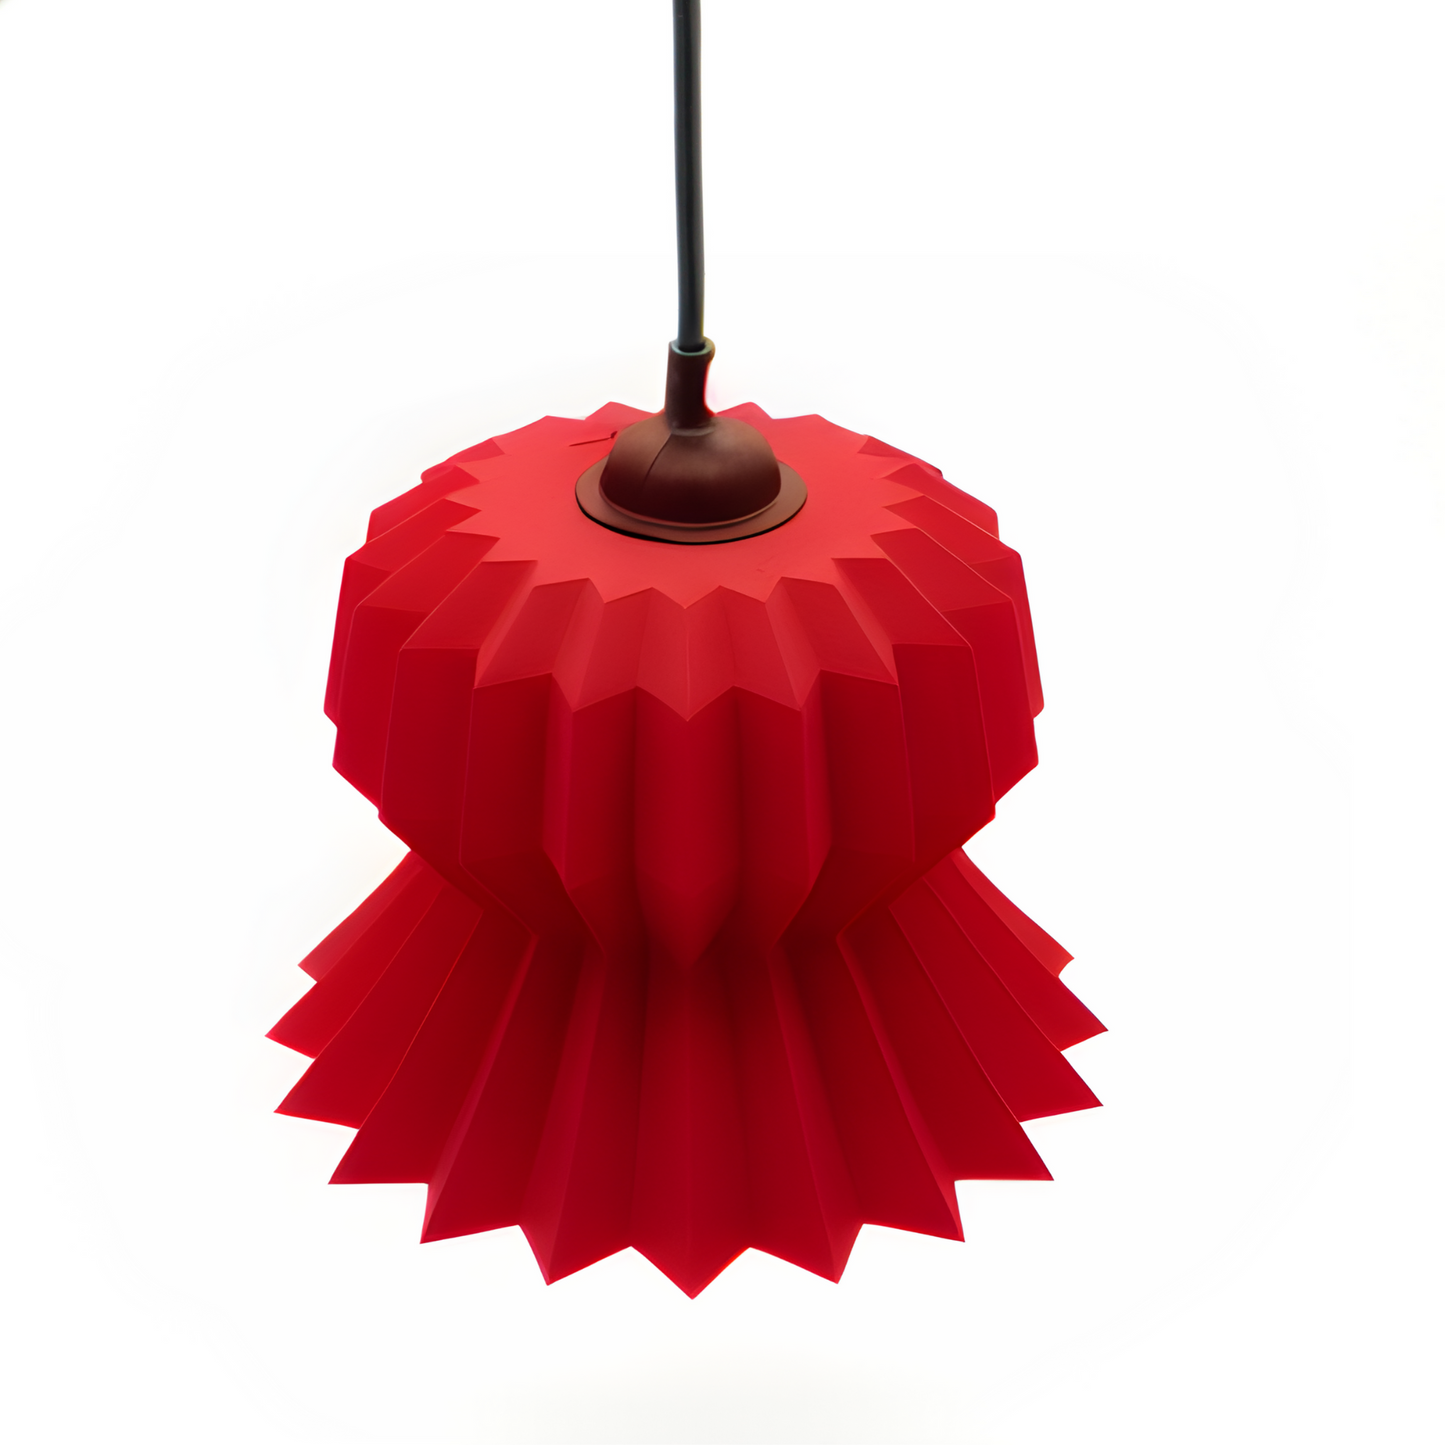 Ostia design pendant lamp red edition